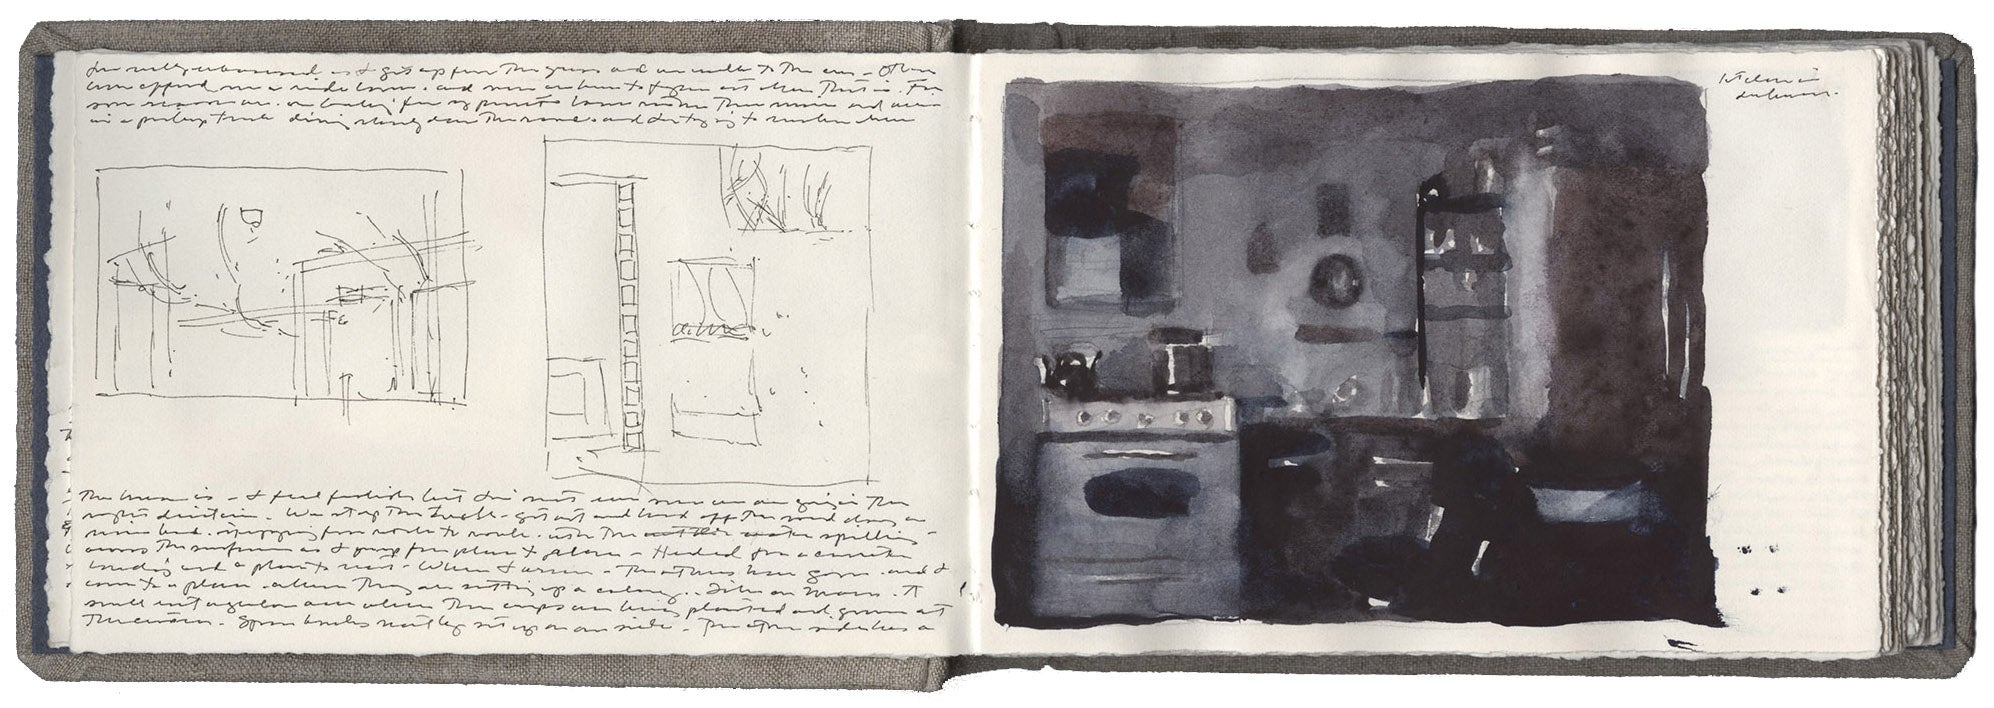 Studies with Kitchen in Darkness image